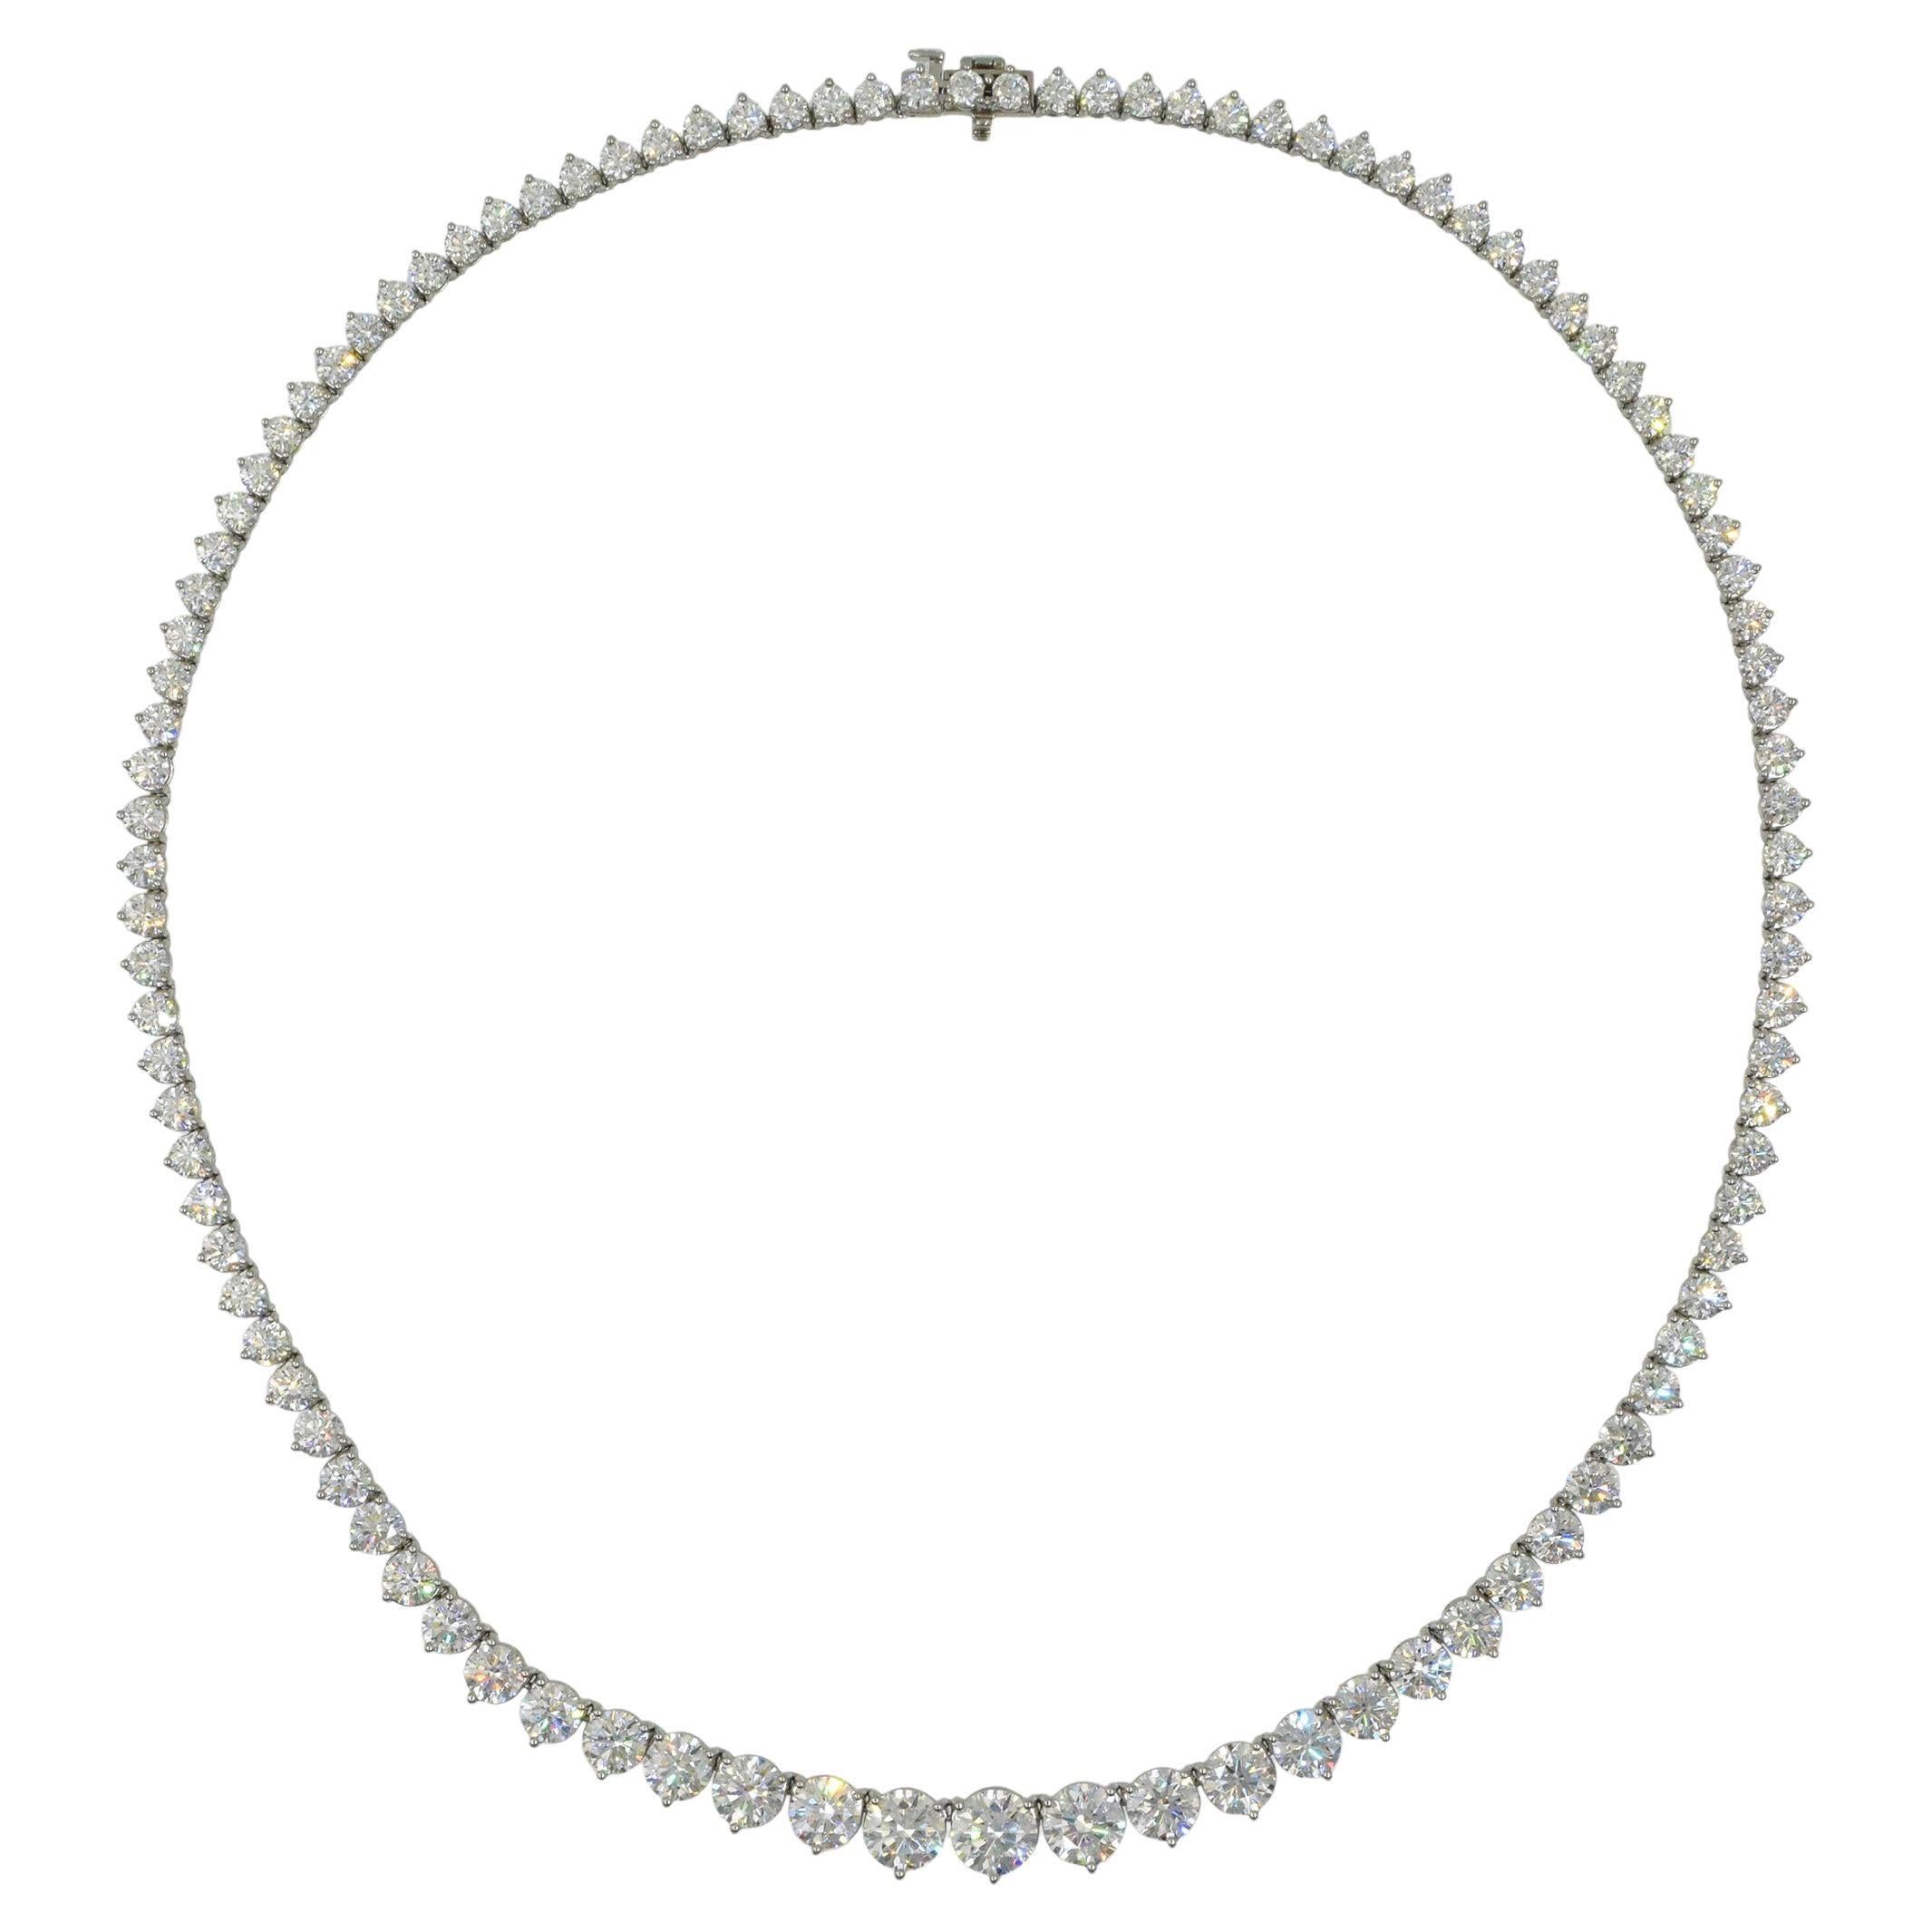 Diamond Riviere Necklace by Harry Winston